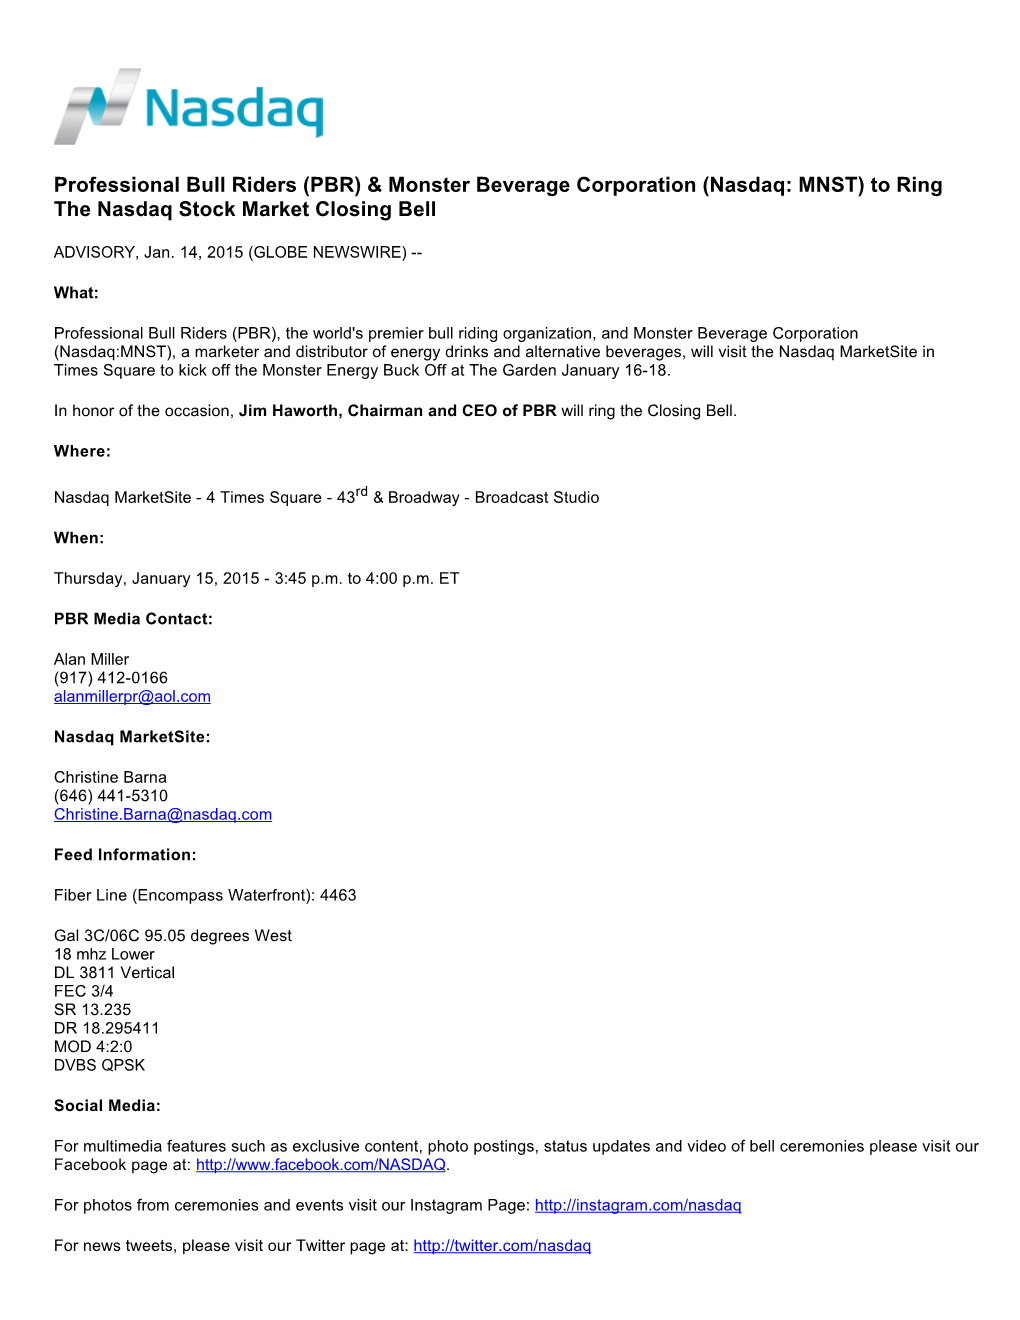 Professional Bull Riders (PBR) & Monster Beverage Corporation (Nasdaq: MNST) to Ring the Nasdaq Stock Market Closing Bell